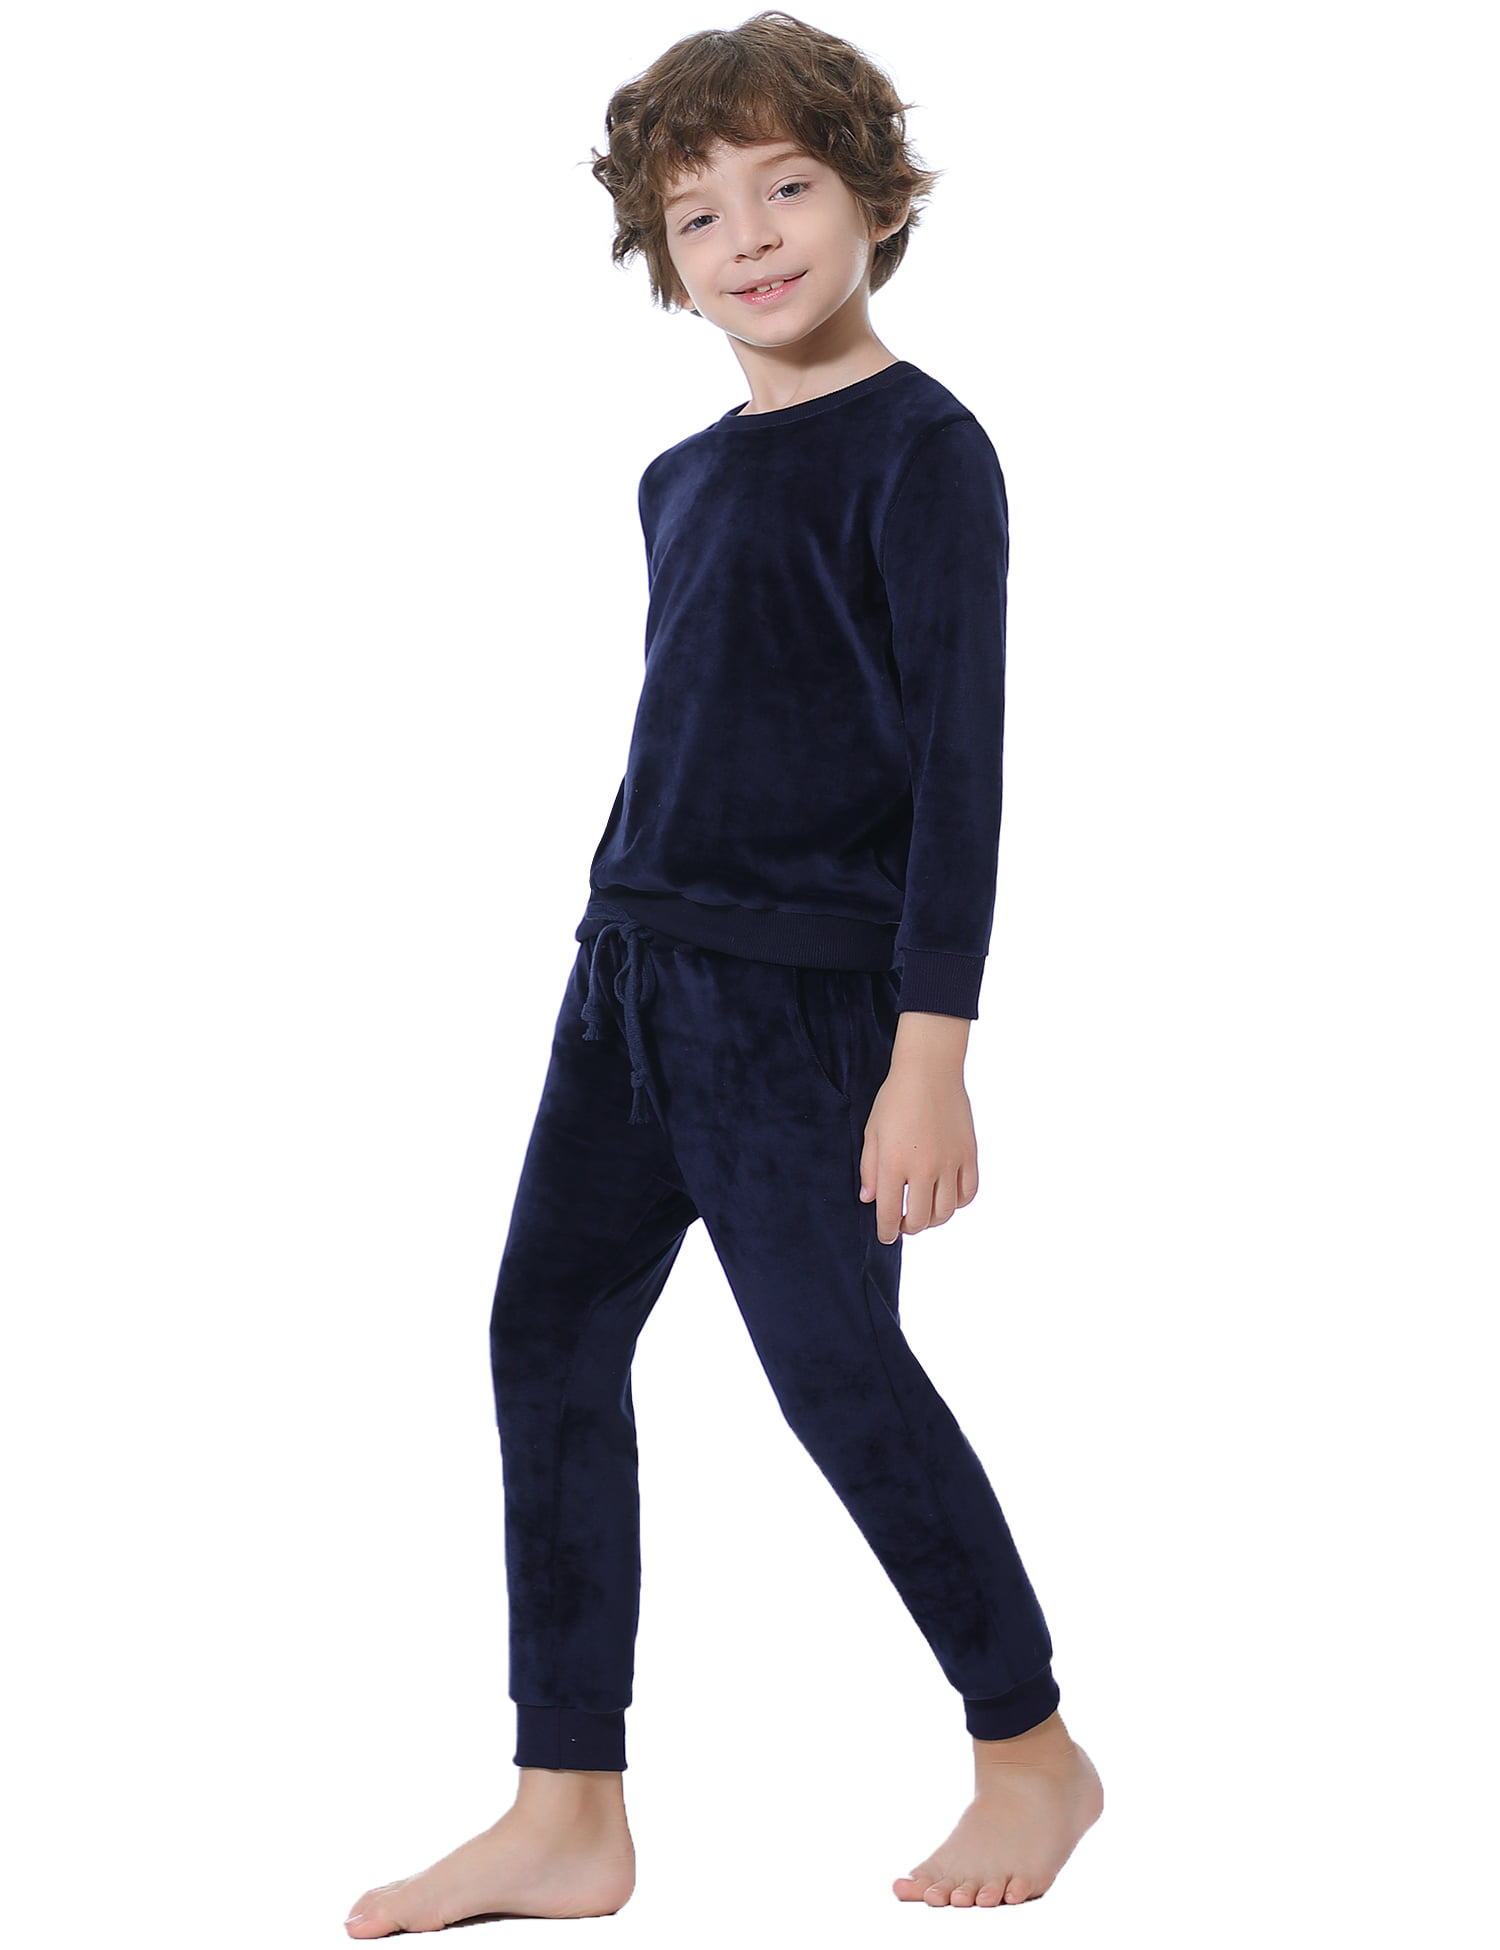 Uniexcosm Kids Long Sleeve Velvet Pajamas Sets for Girls Boys